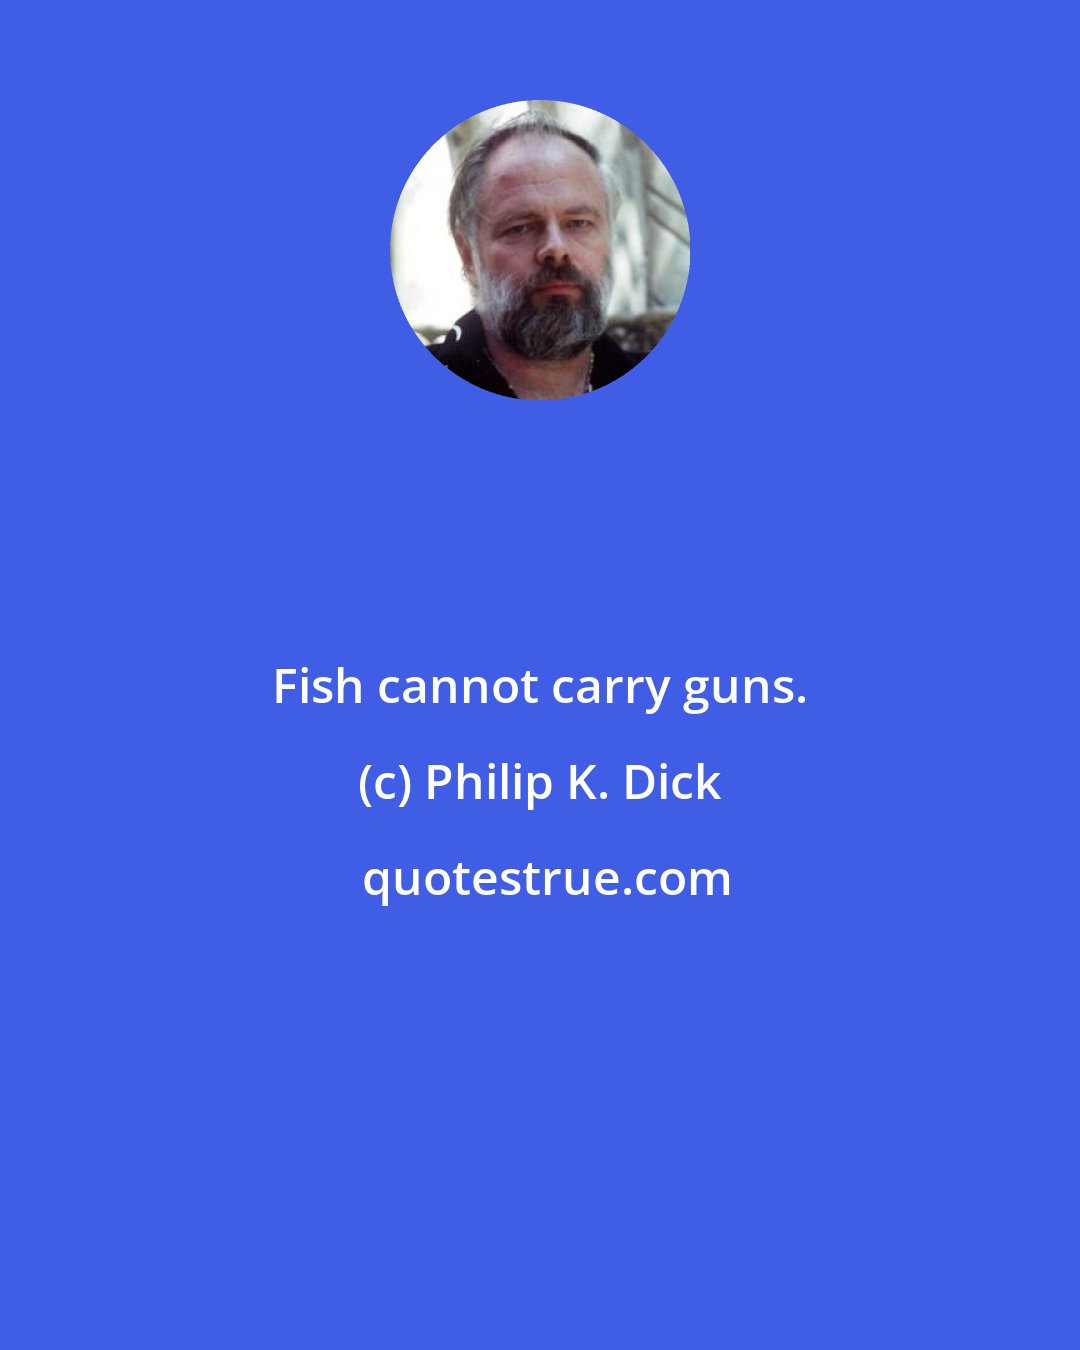 Philip K. Dick: Fish cannot carry guns.